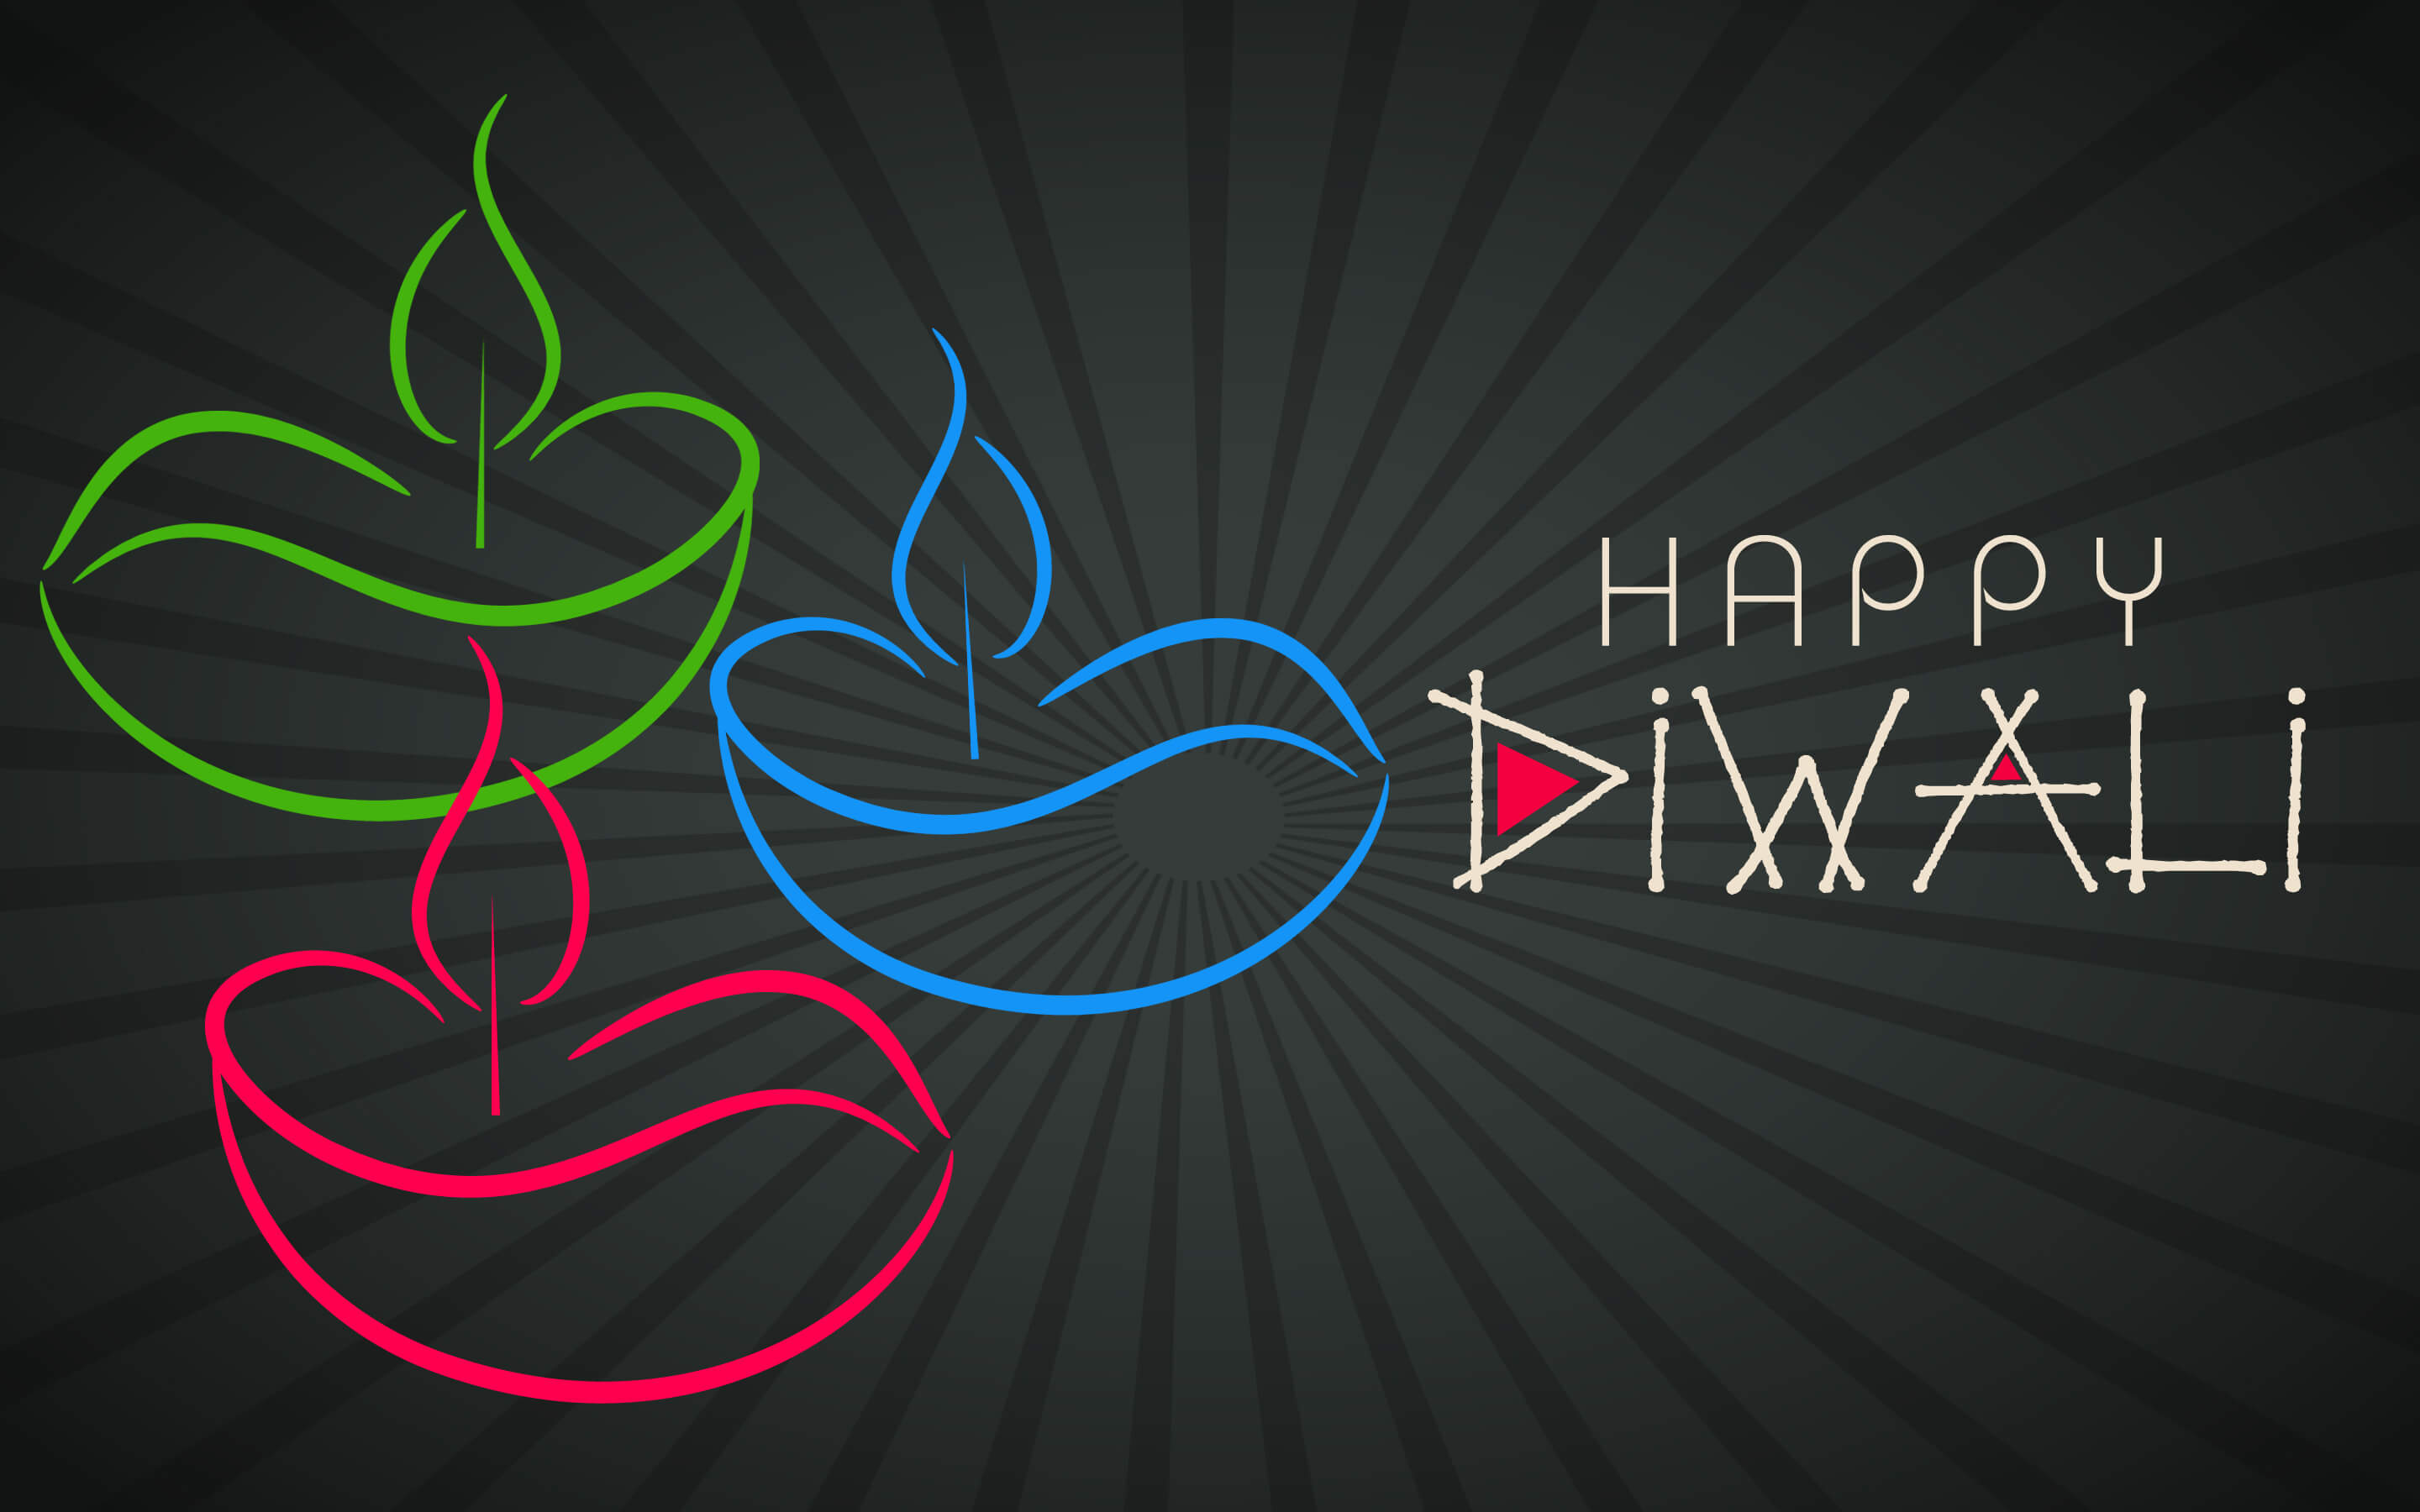 Download-Happy-Diwali-2015-HD-Wallpapers-facebook-mobile-desktop-cgfrog-3